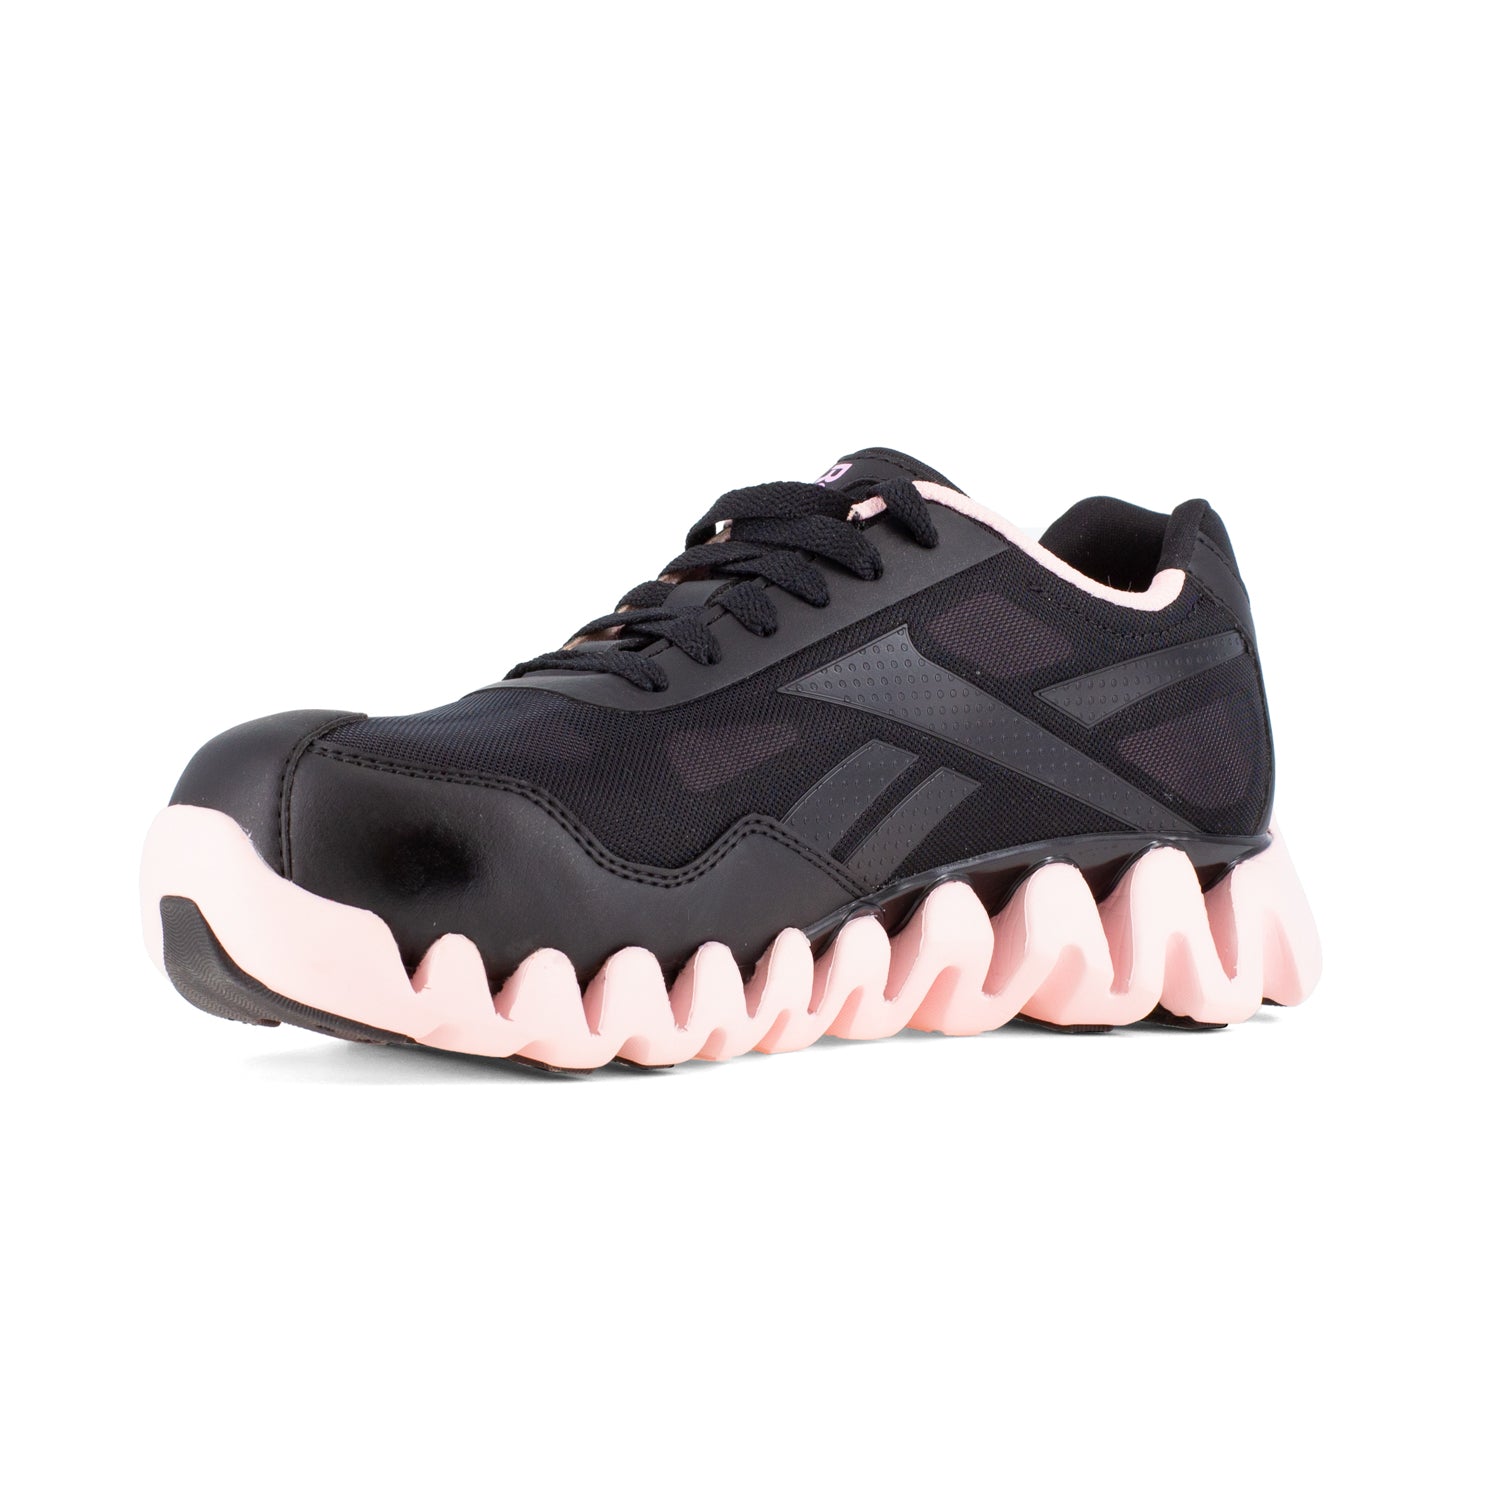 Reebok Womens Black/Pink Mesh Shoes Zig Athletic CT – The Company